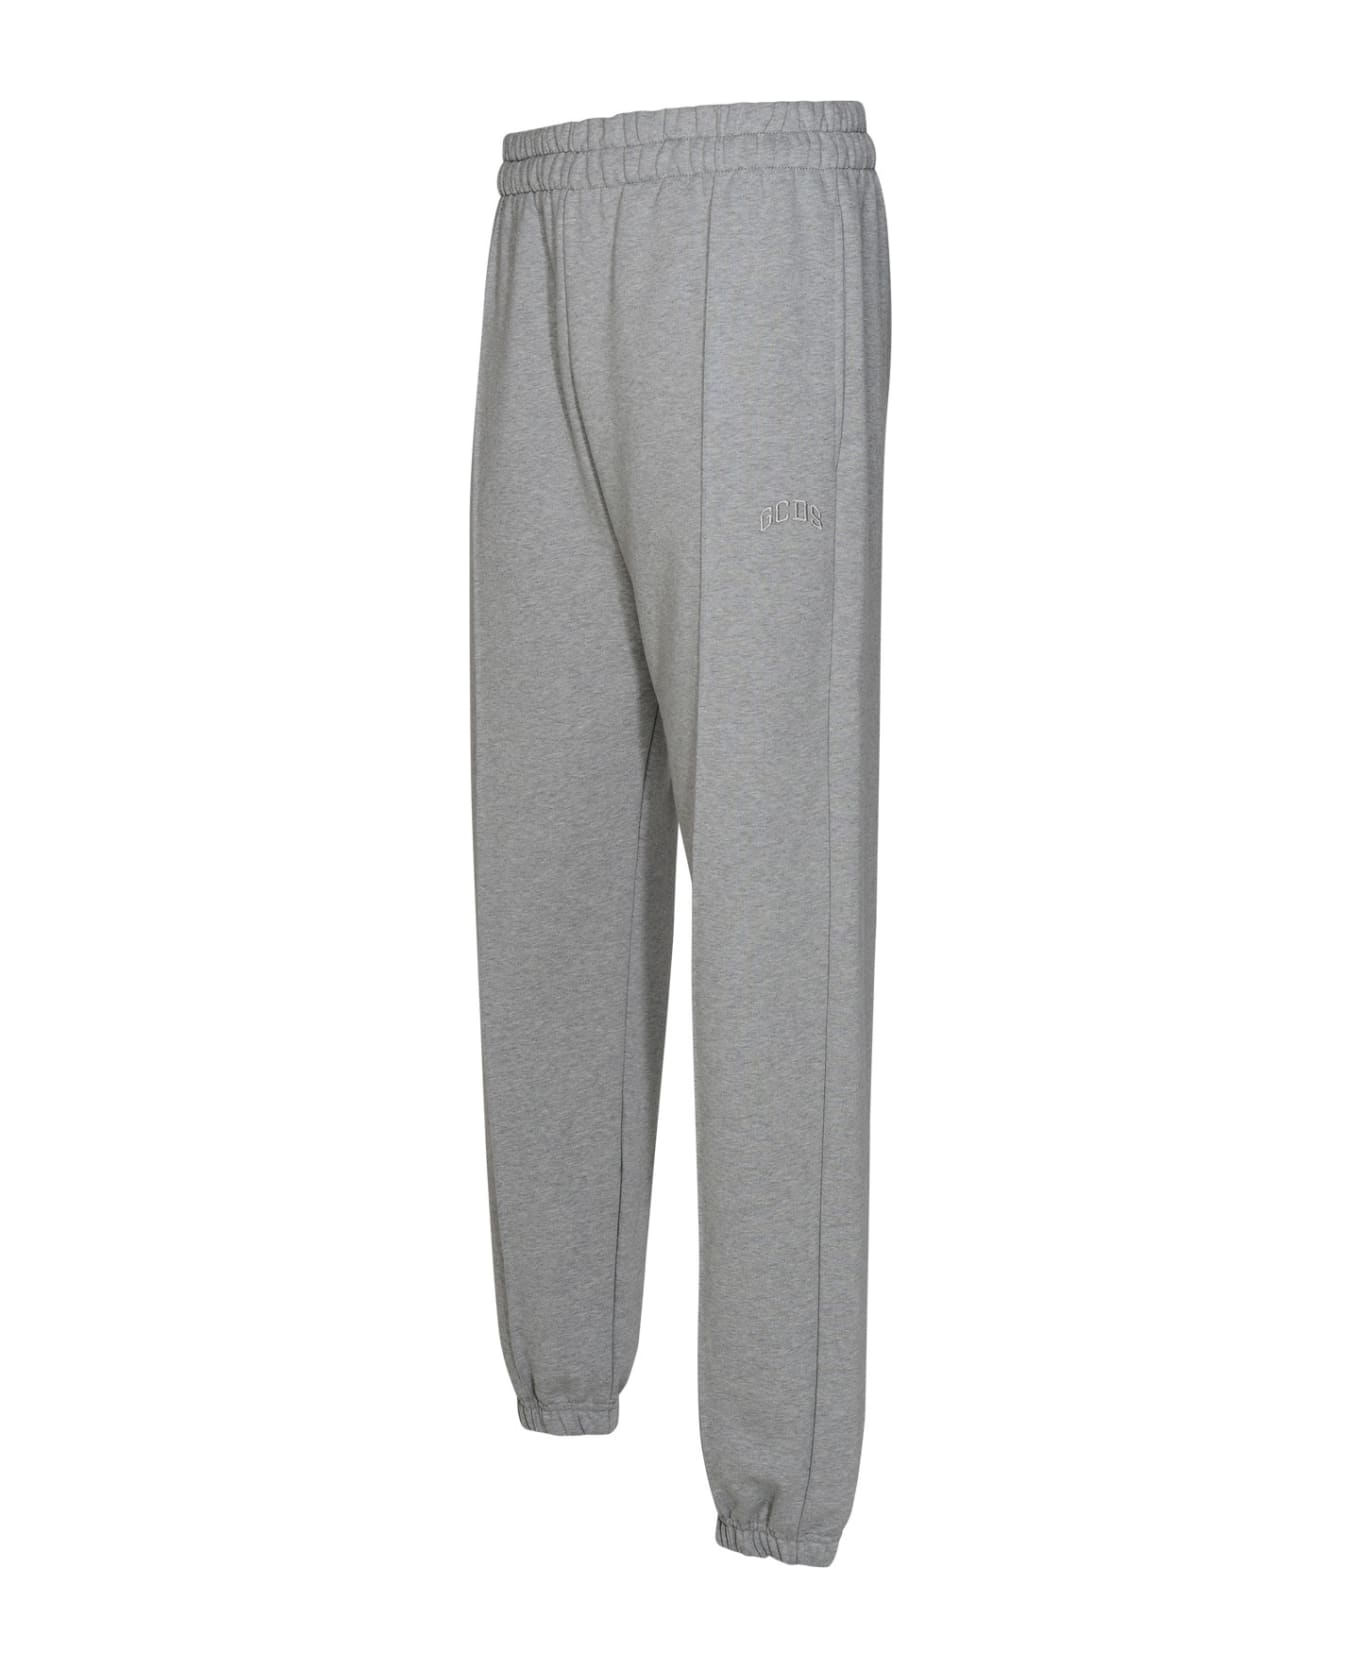 GCDS Grey Cotton Track Pants - Grey